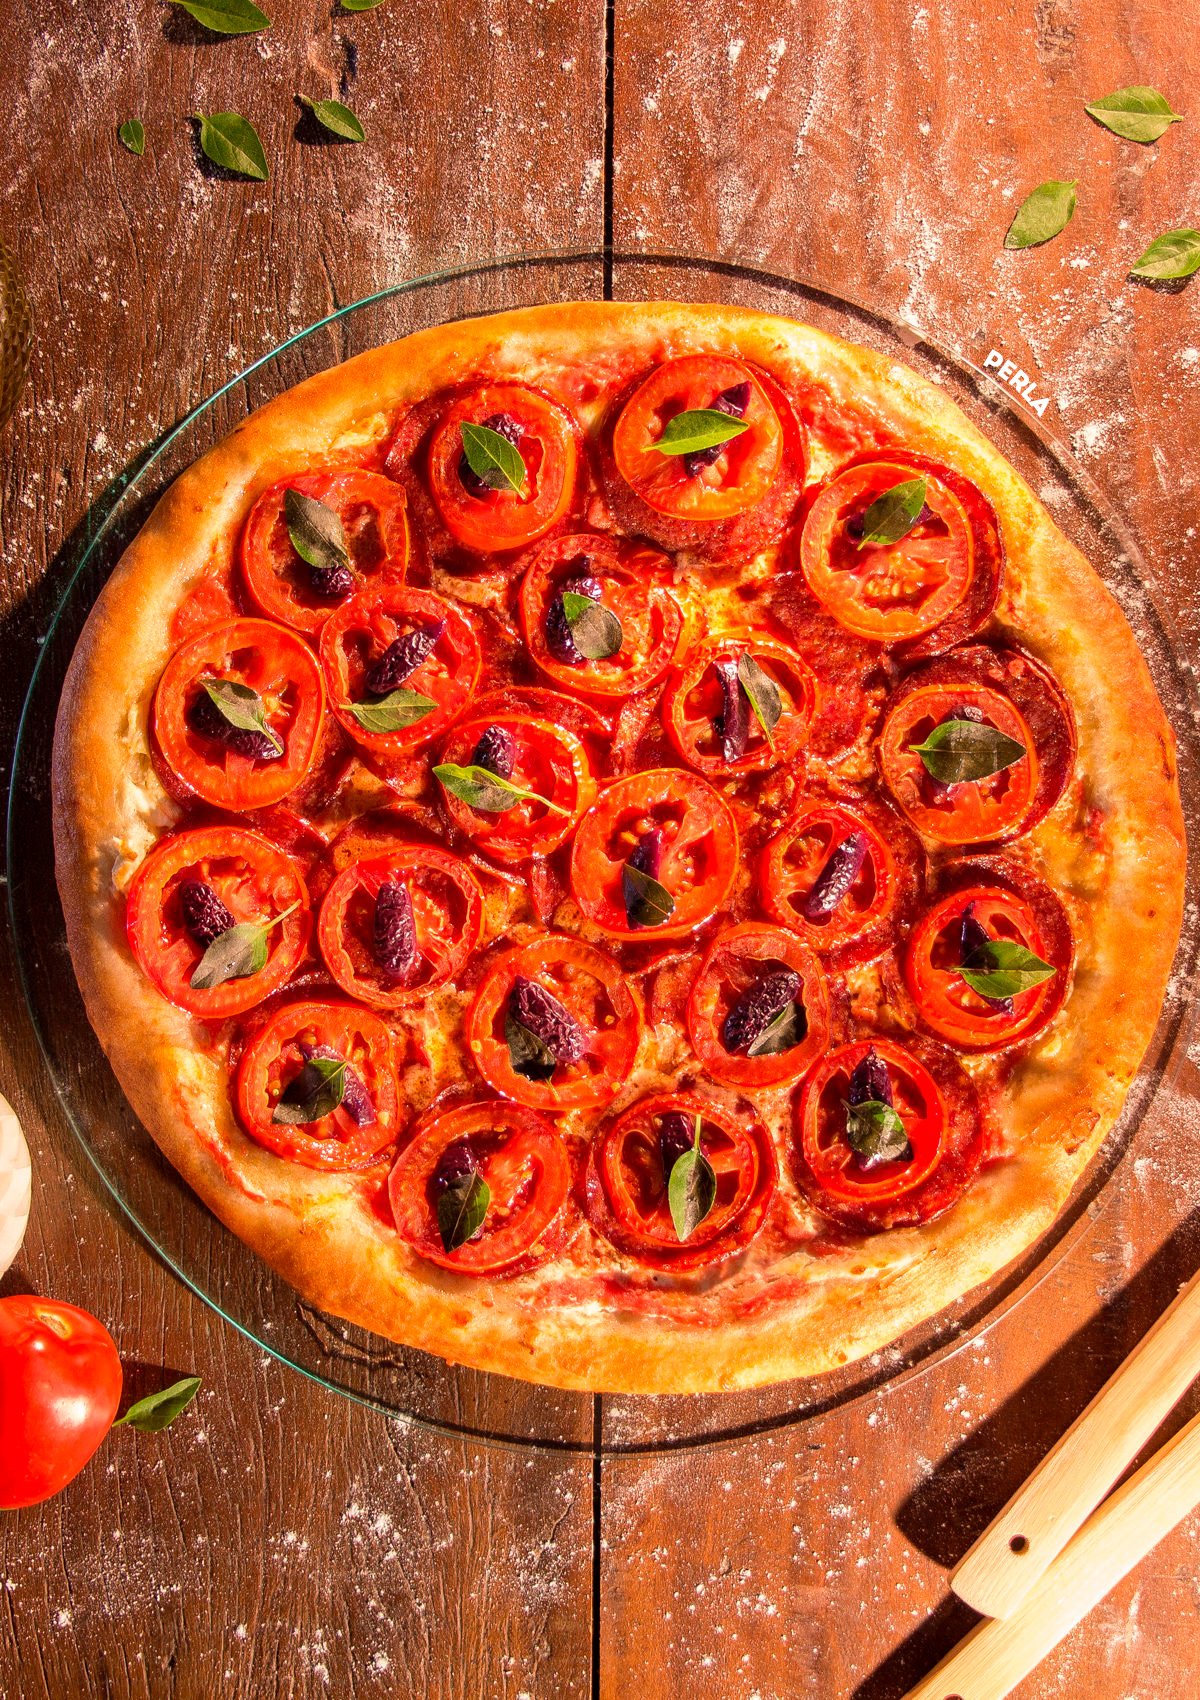 Pizzaria siciliana - Informações Peça Online. Cardápio digital